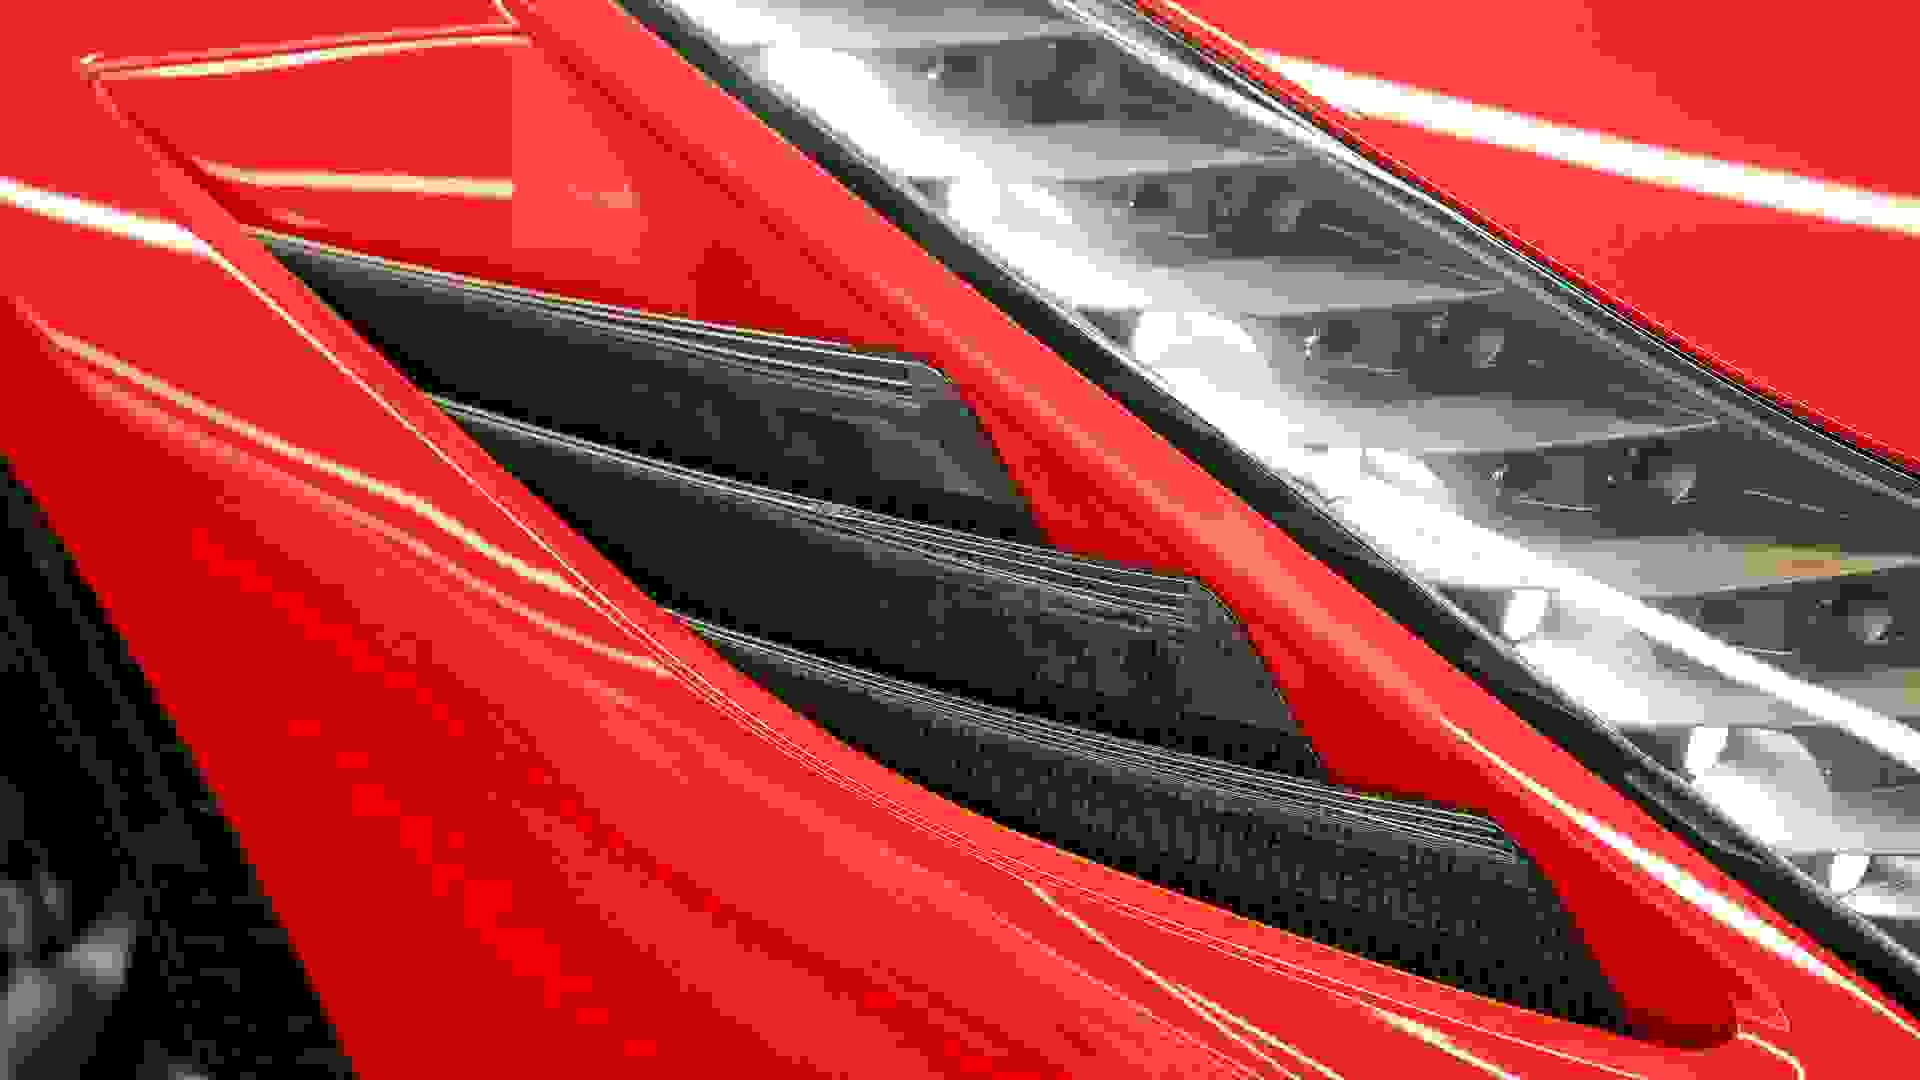 Ferrari 458 Photo 27537432-4335-4d09-9afb-e31f0d3d6f96.jpg